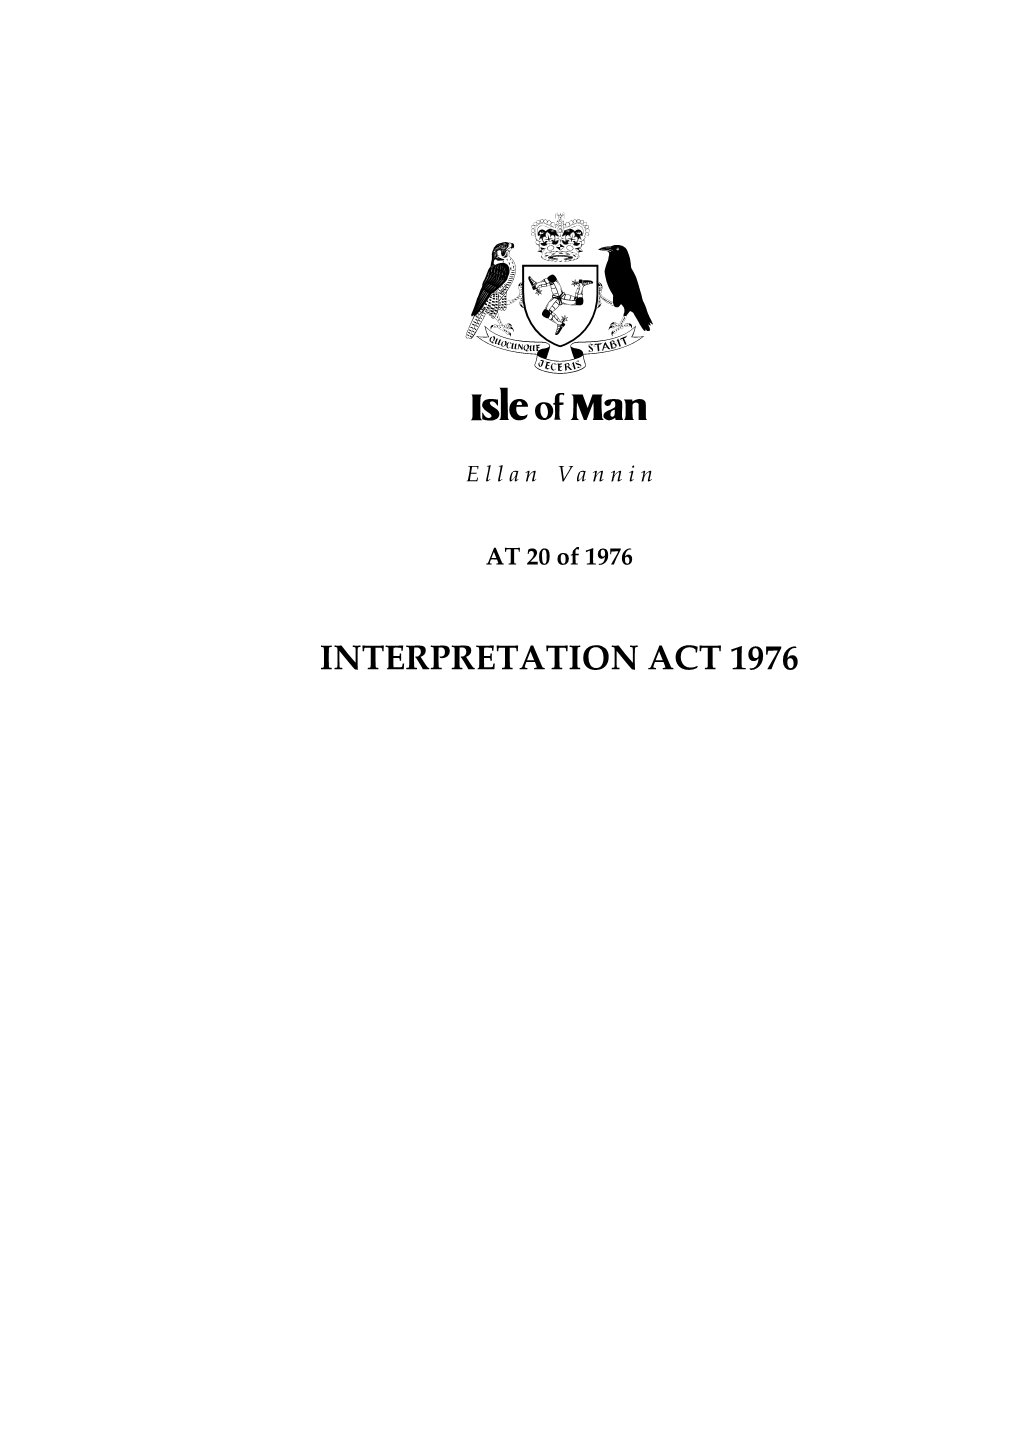 Interpretation Act 1976